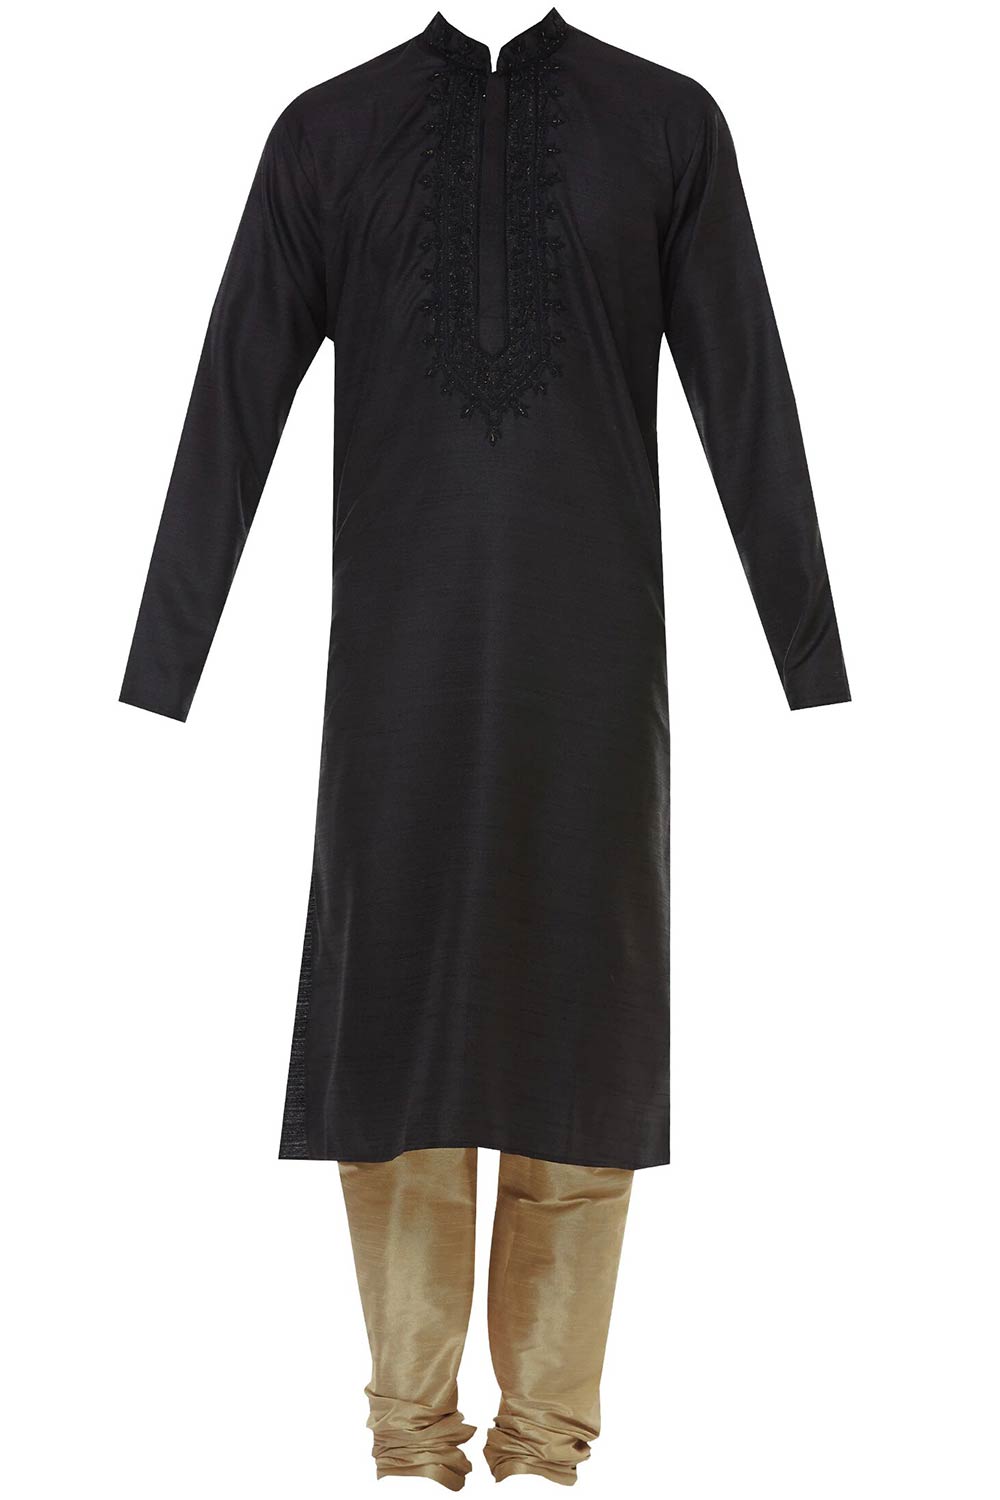 Men's Black Cotton Embroidered Full Sleeve Kurta Churidar